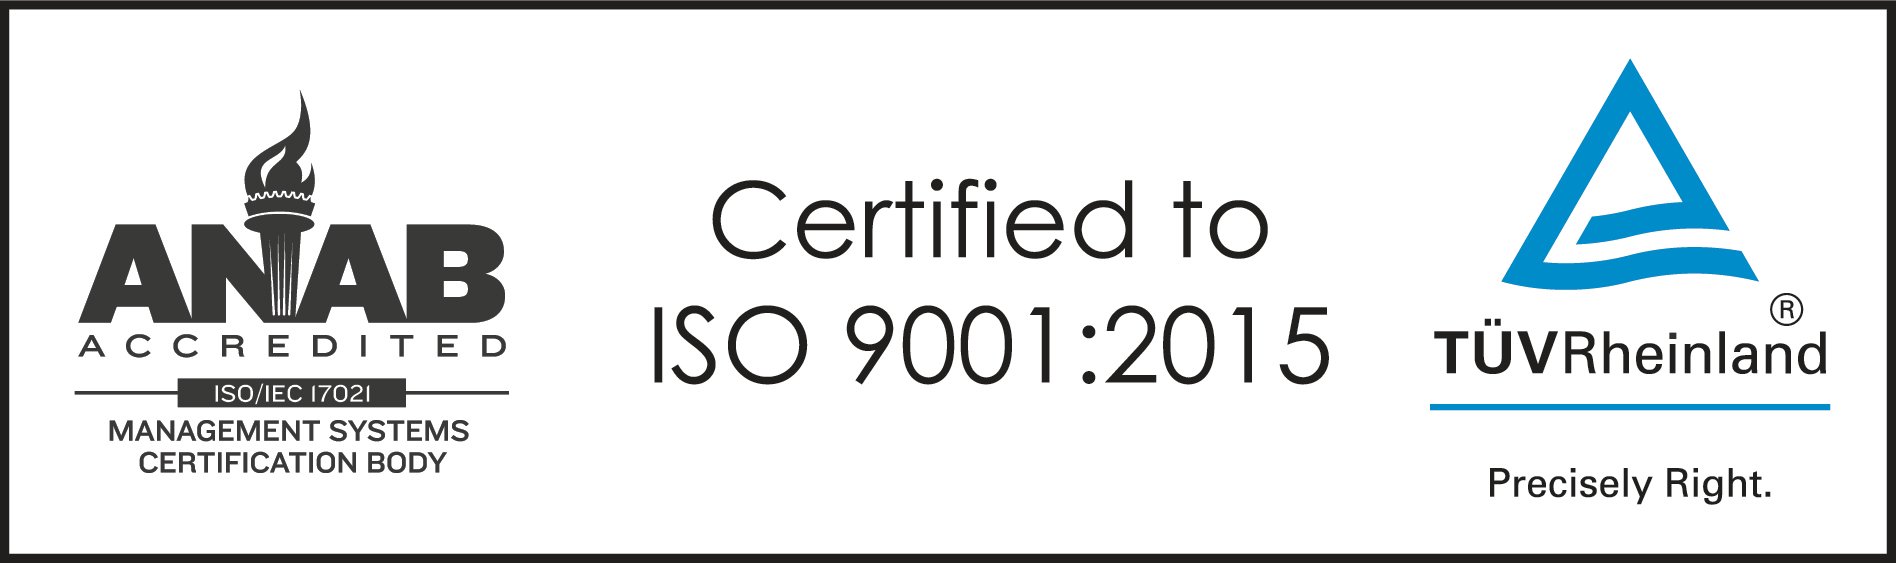 03_ISO 9001-2015_horizontal-BW-Color (002).jpg